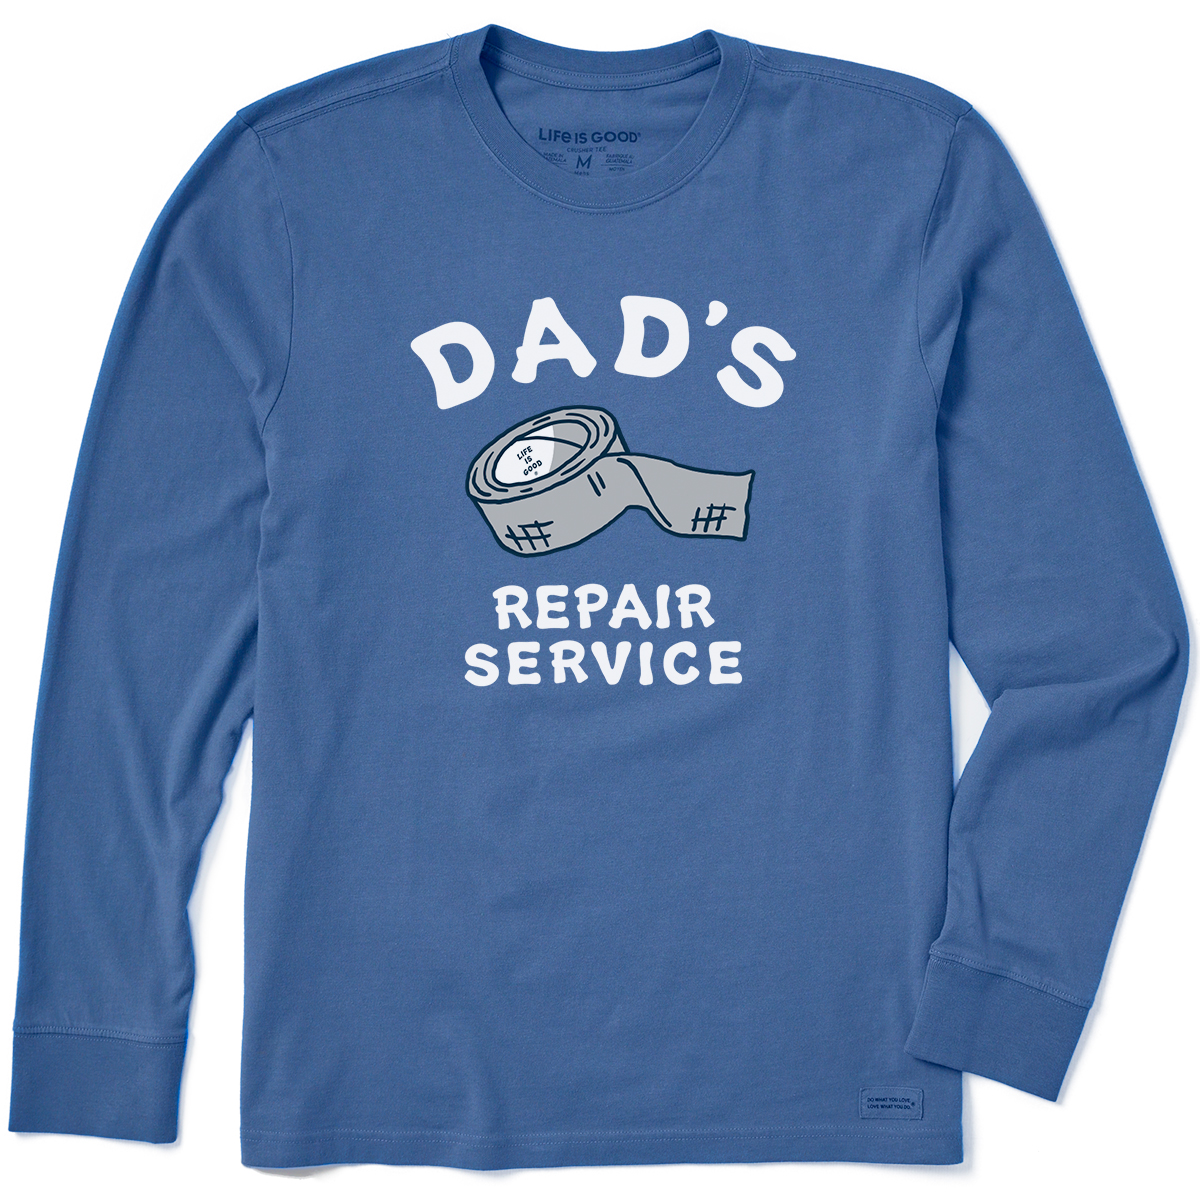 Life Is Good Men's Dad's Repair Service Long-Sleeve Crusher Tee